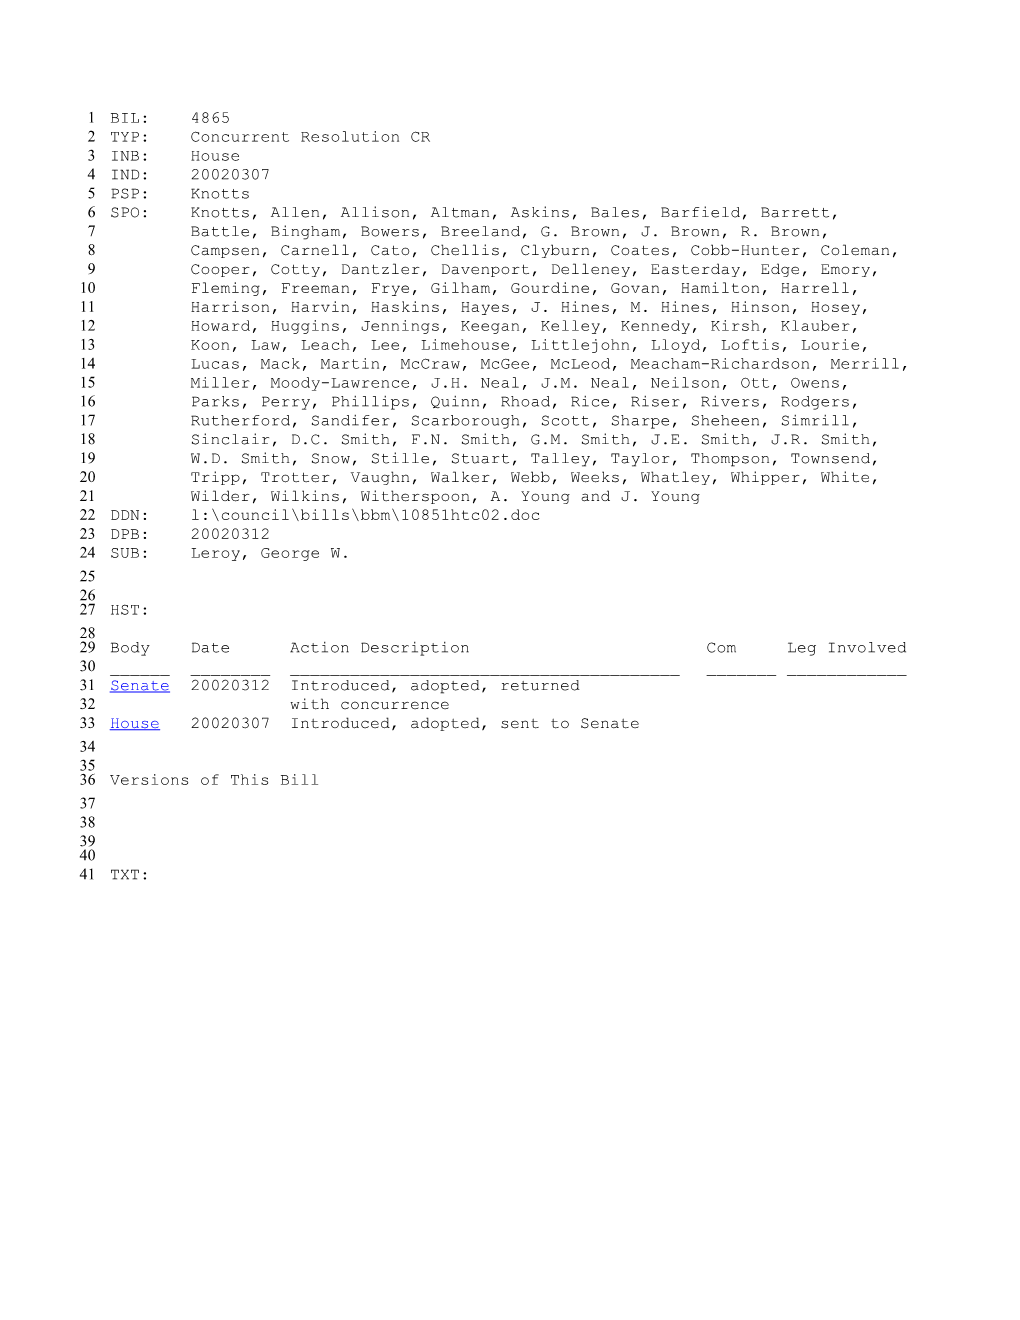 2001-2002 Bill 4865: Leroy, George W. - South Carolina Legislature Online